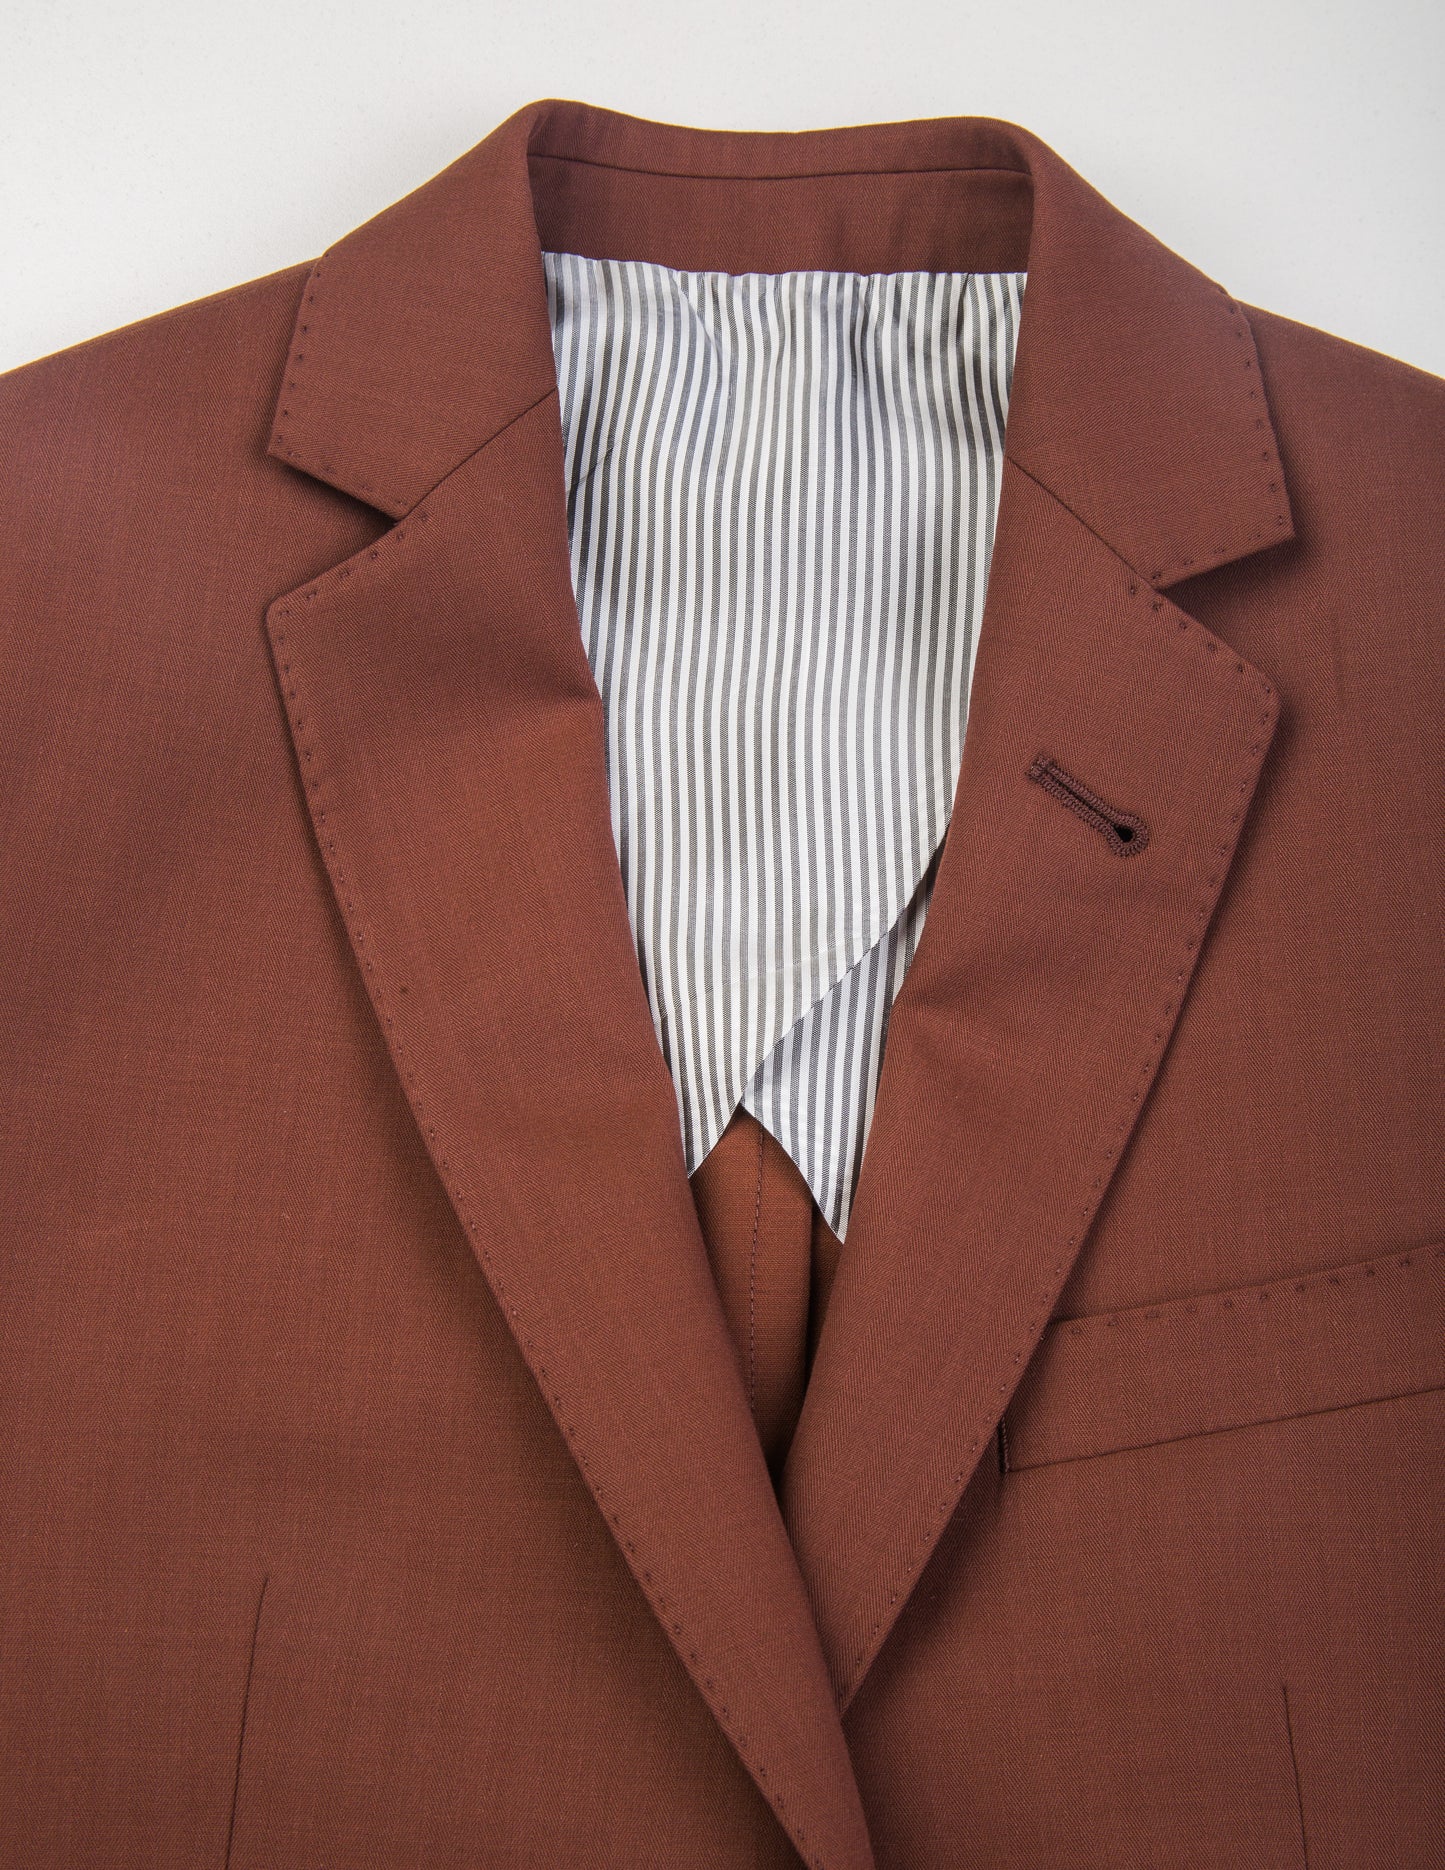 BKT50 Tailored Jacket in Herringbone Wool/Cotton - Brick